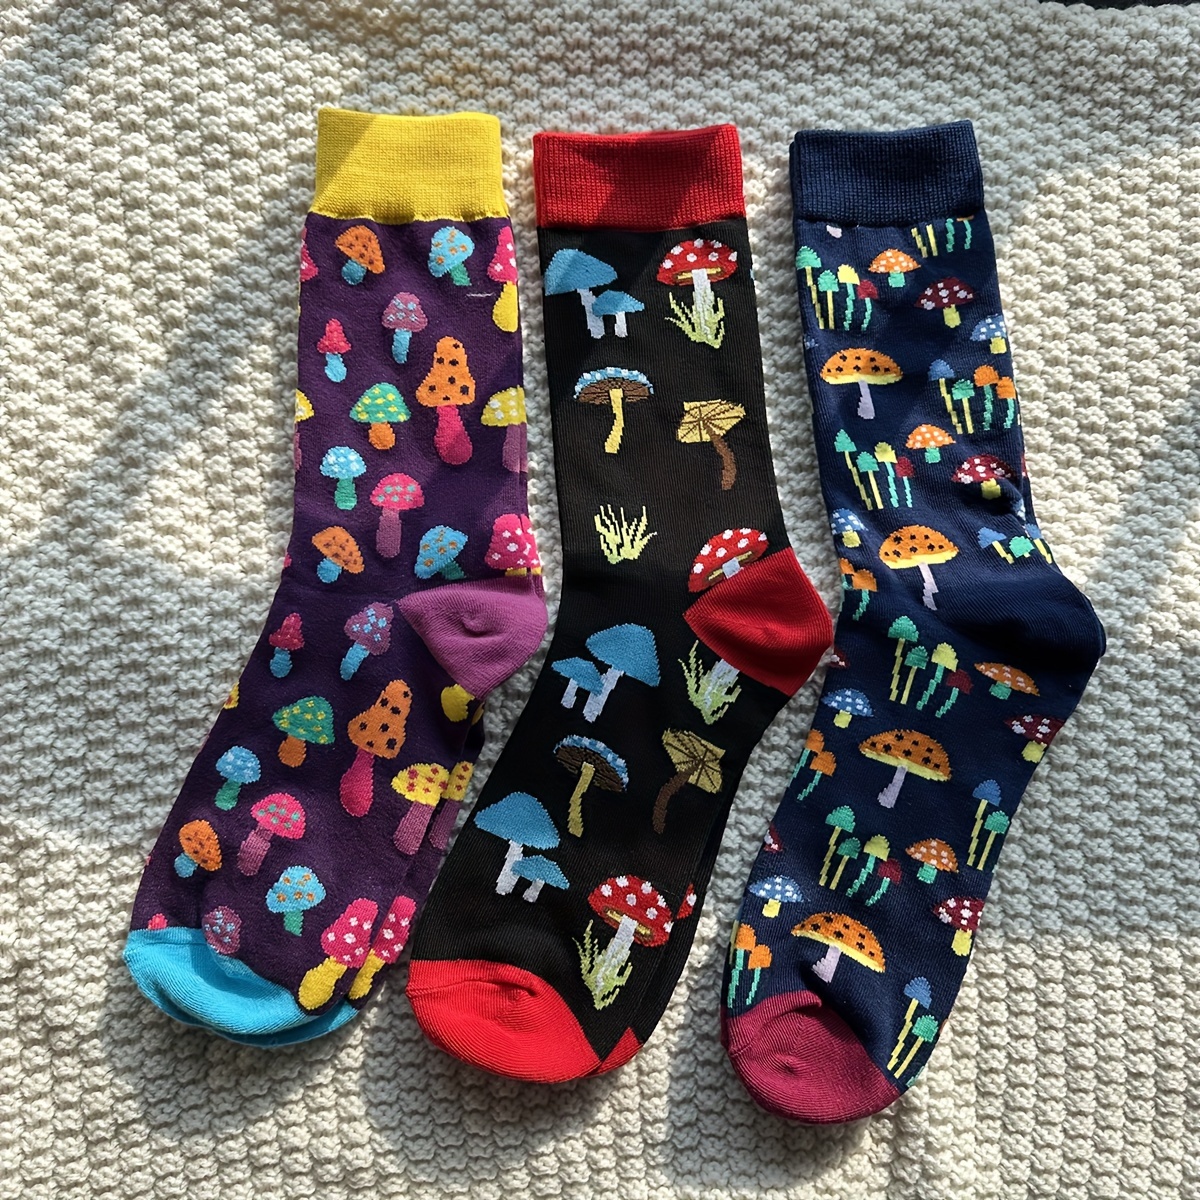 

Mushroom Pattern 3 Pairs Of Men's Trendy Cartoon Pattern Crew Mid-calf Socks, Breathable Comfy Casual Unisex Socks For Men's Outdoor Wearing All Seasons Wearing